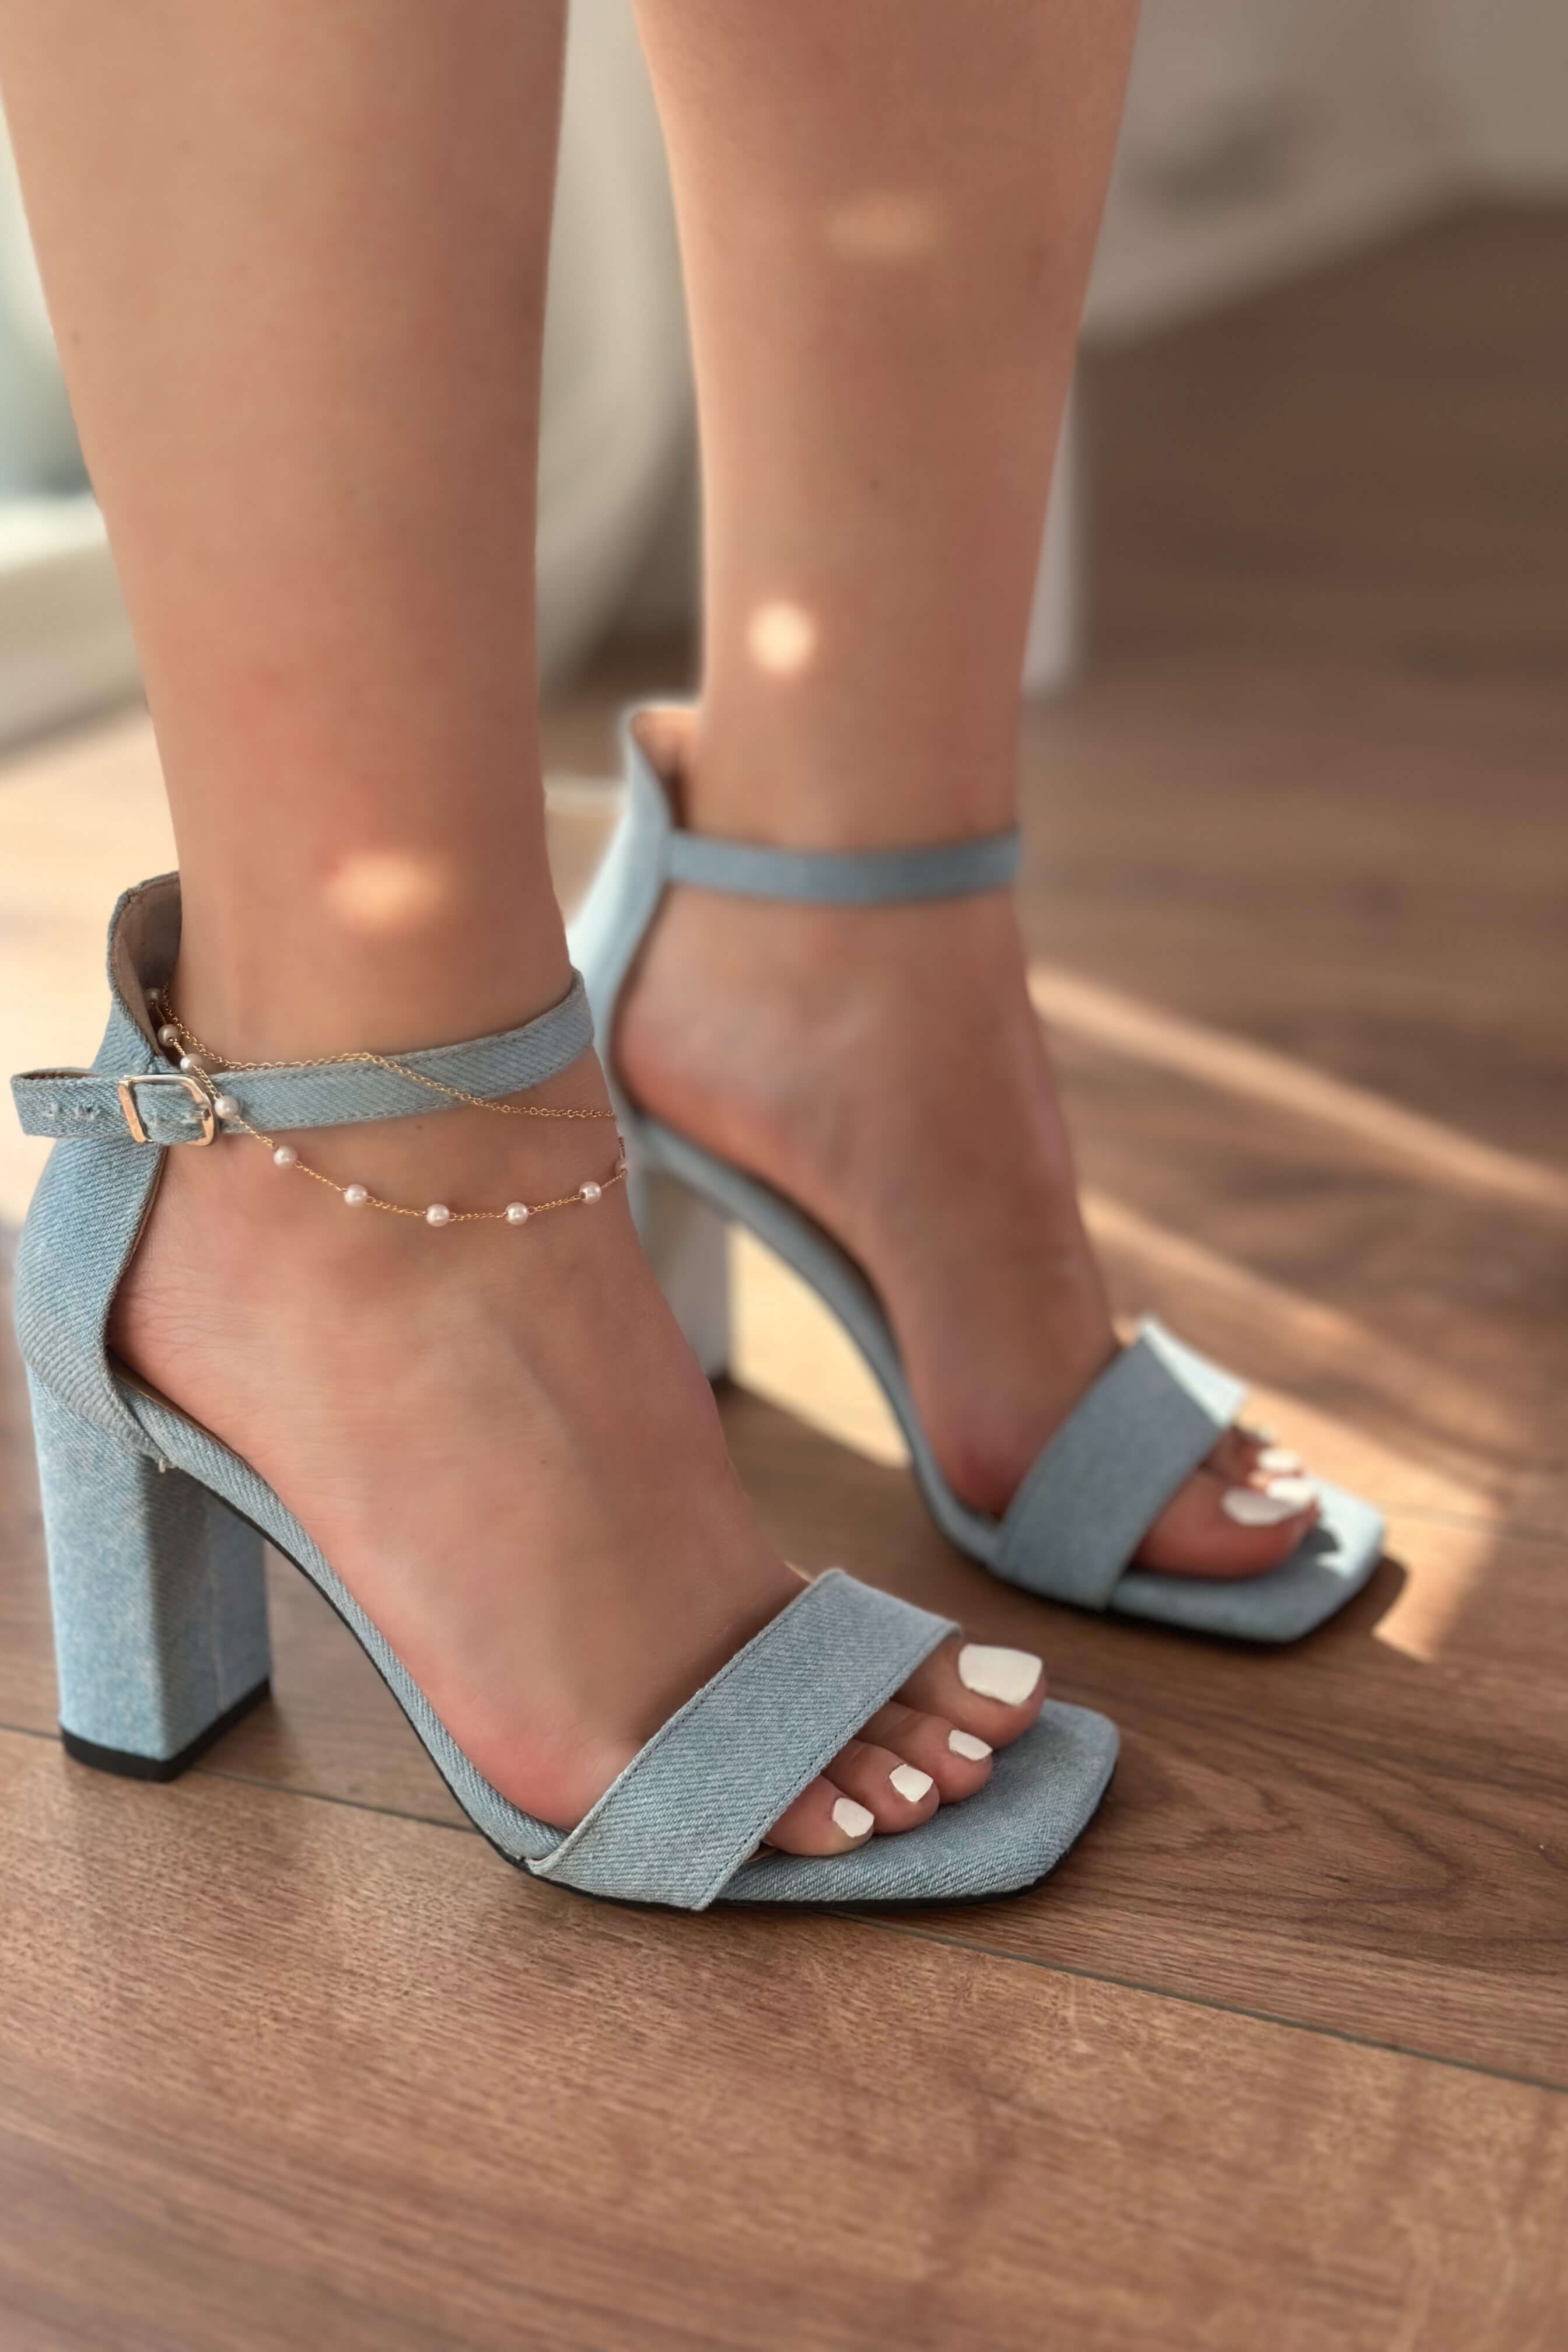 Orwils jeans female high heeled shoes